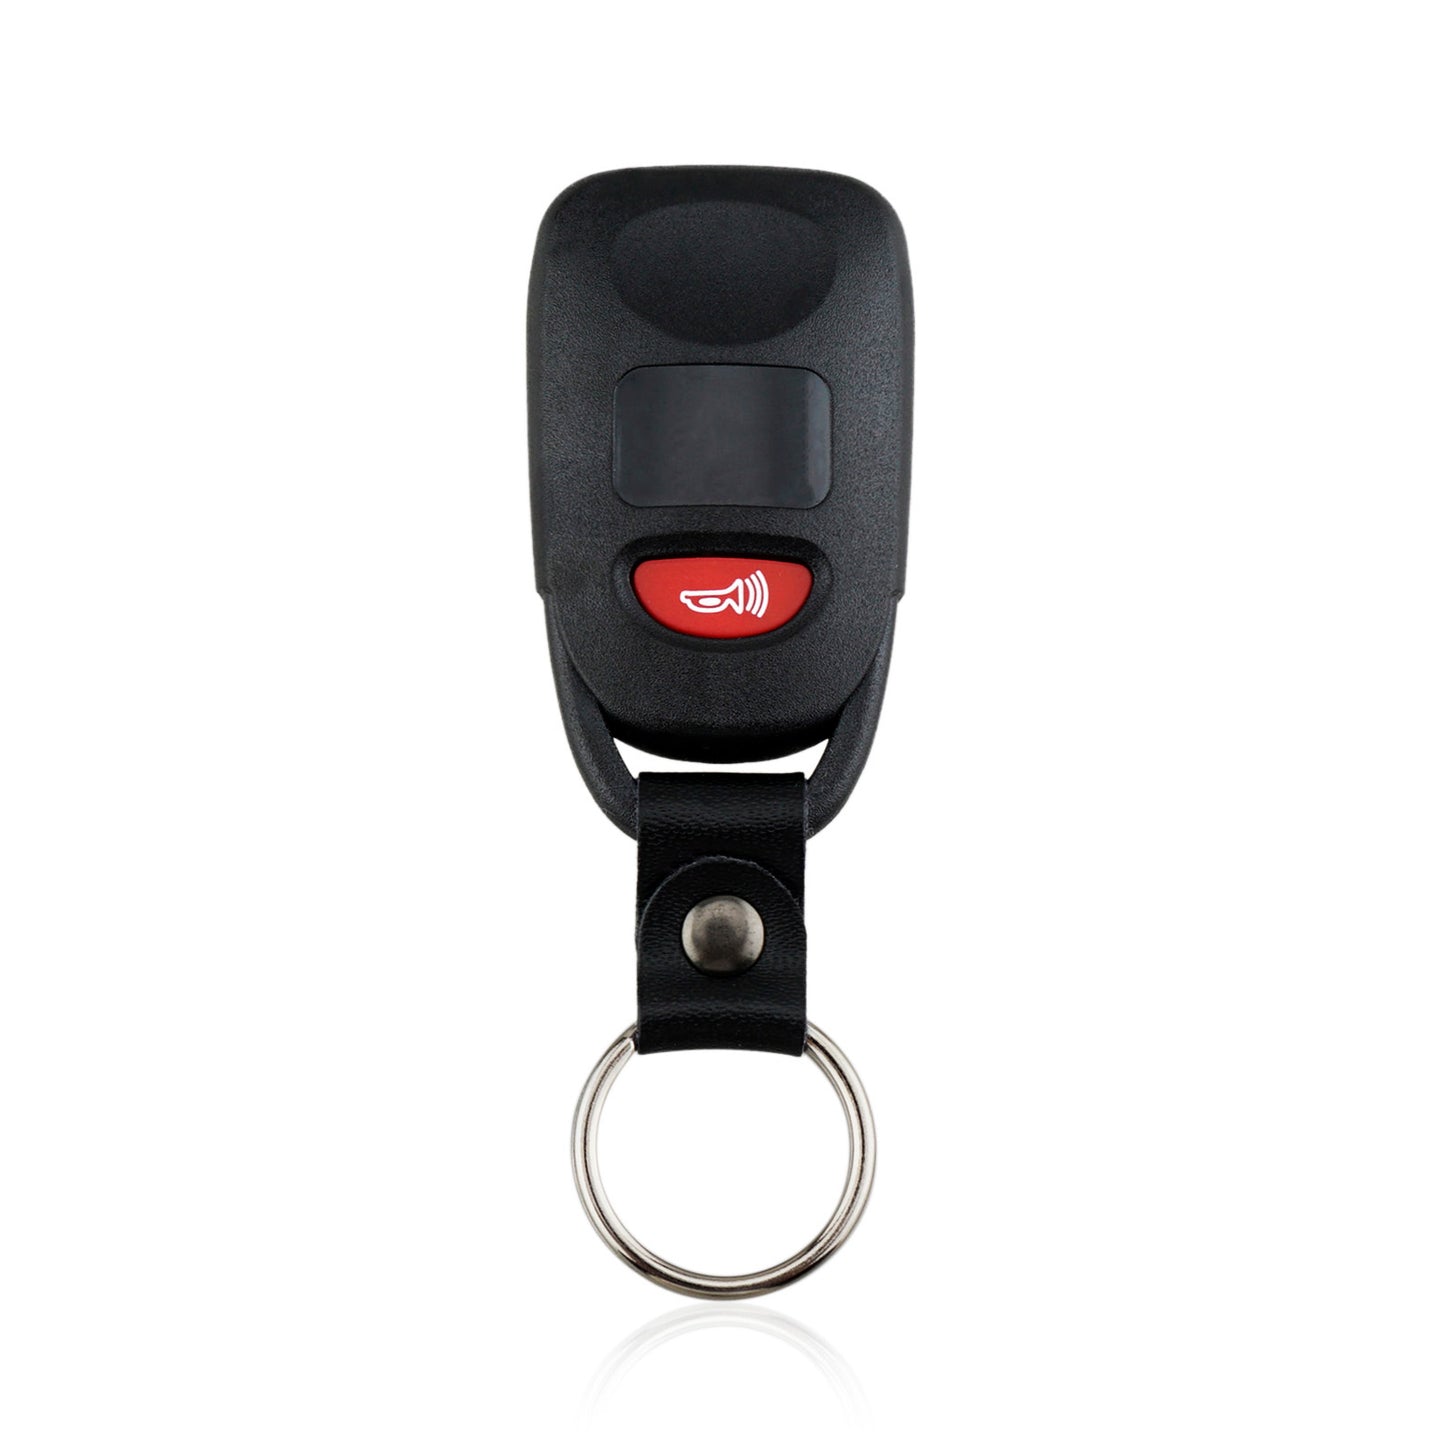 3+1 Buttons 315MHz Keyless Entry Fob Remote Car Key For 2007-2010 Kia Sorento Rondo FCC ID: PLNHM-T011 PLNHMT011 : J924